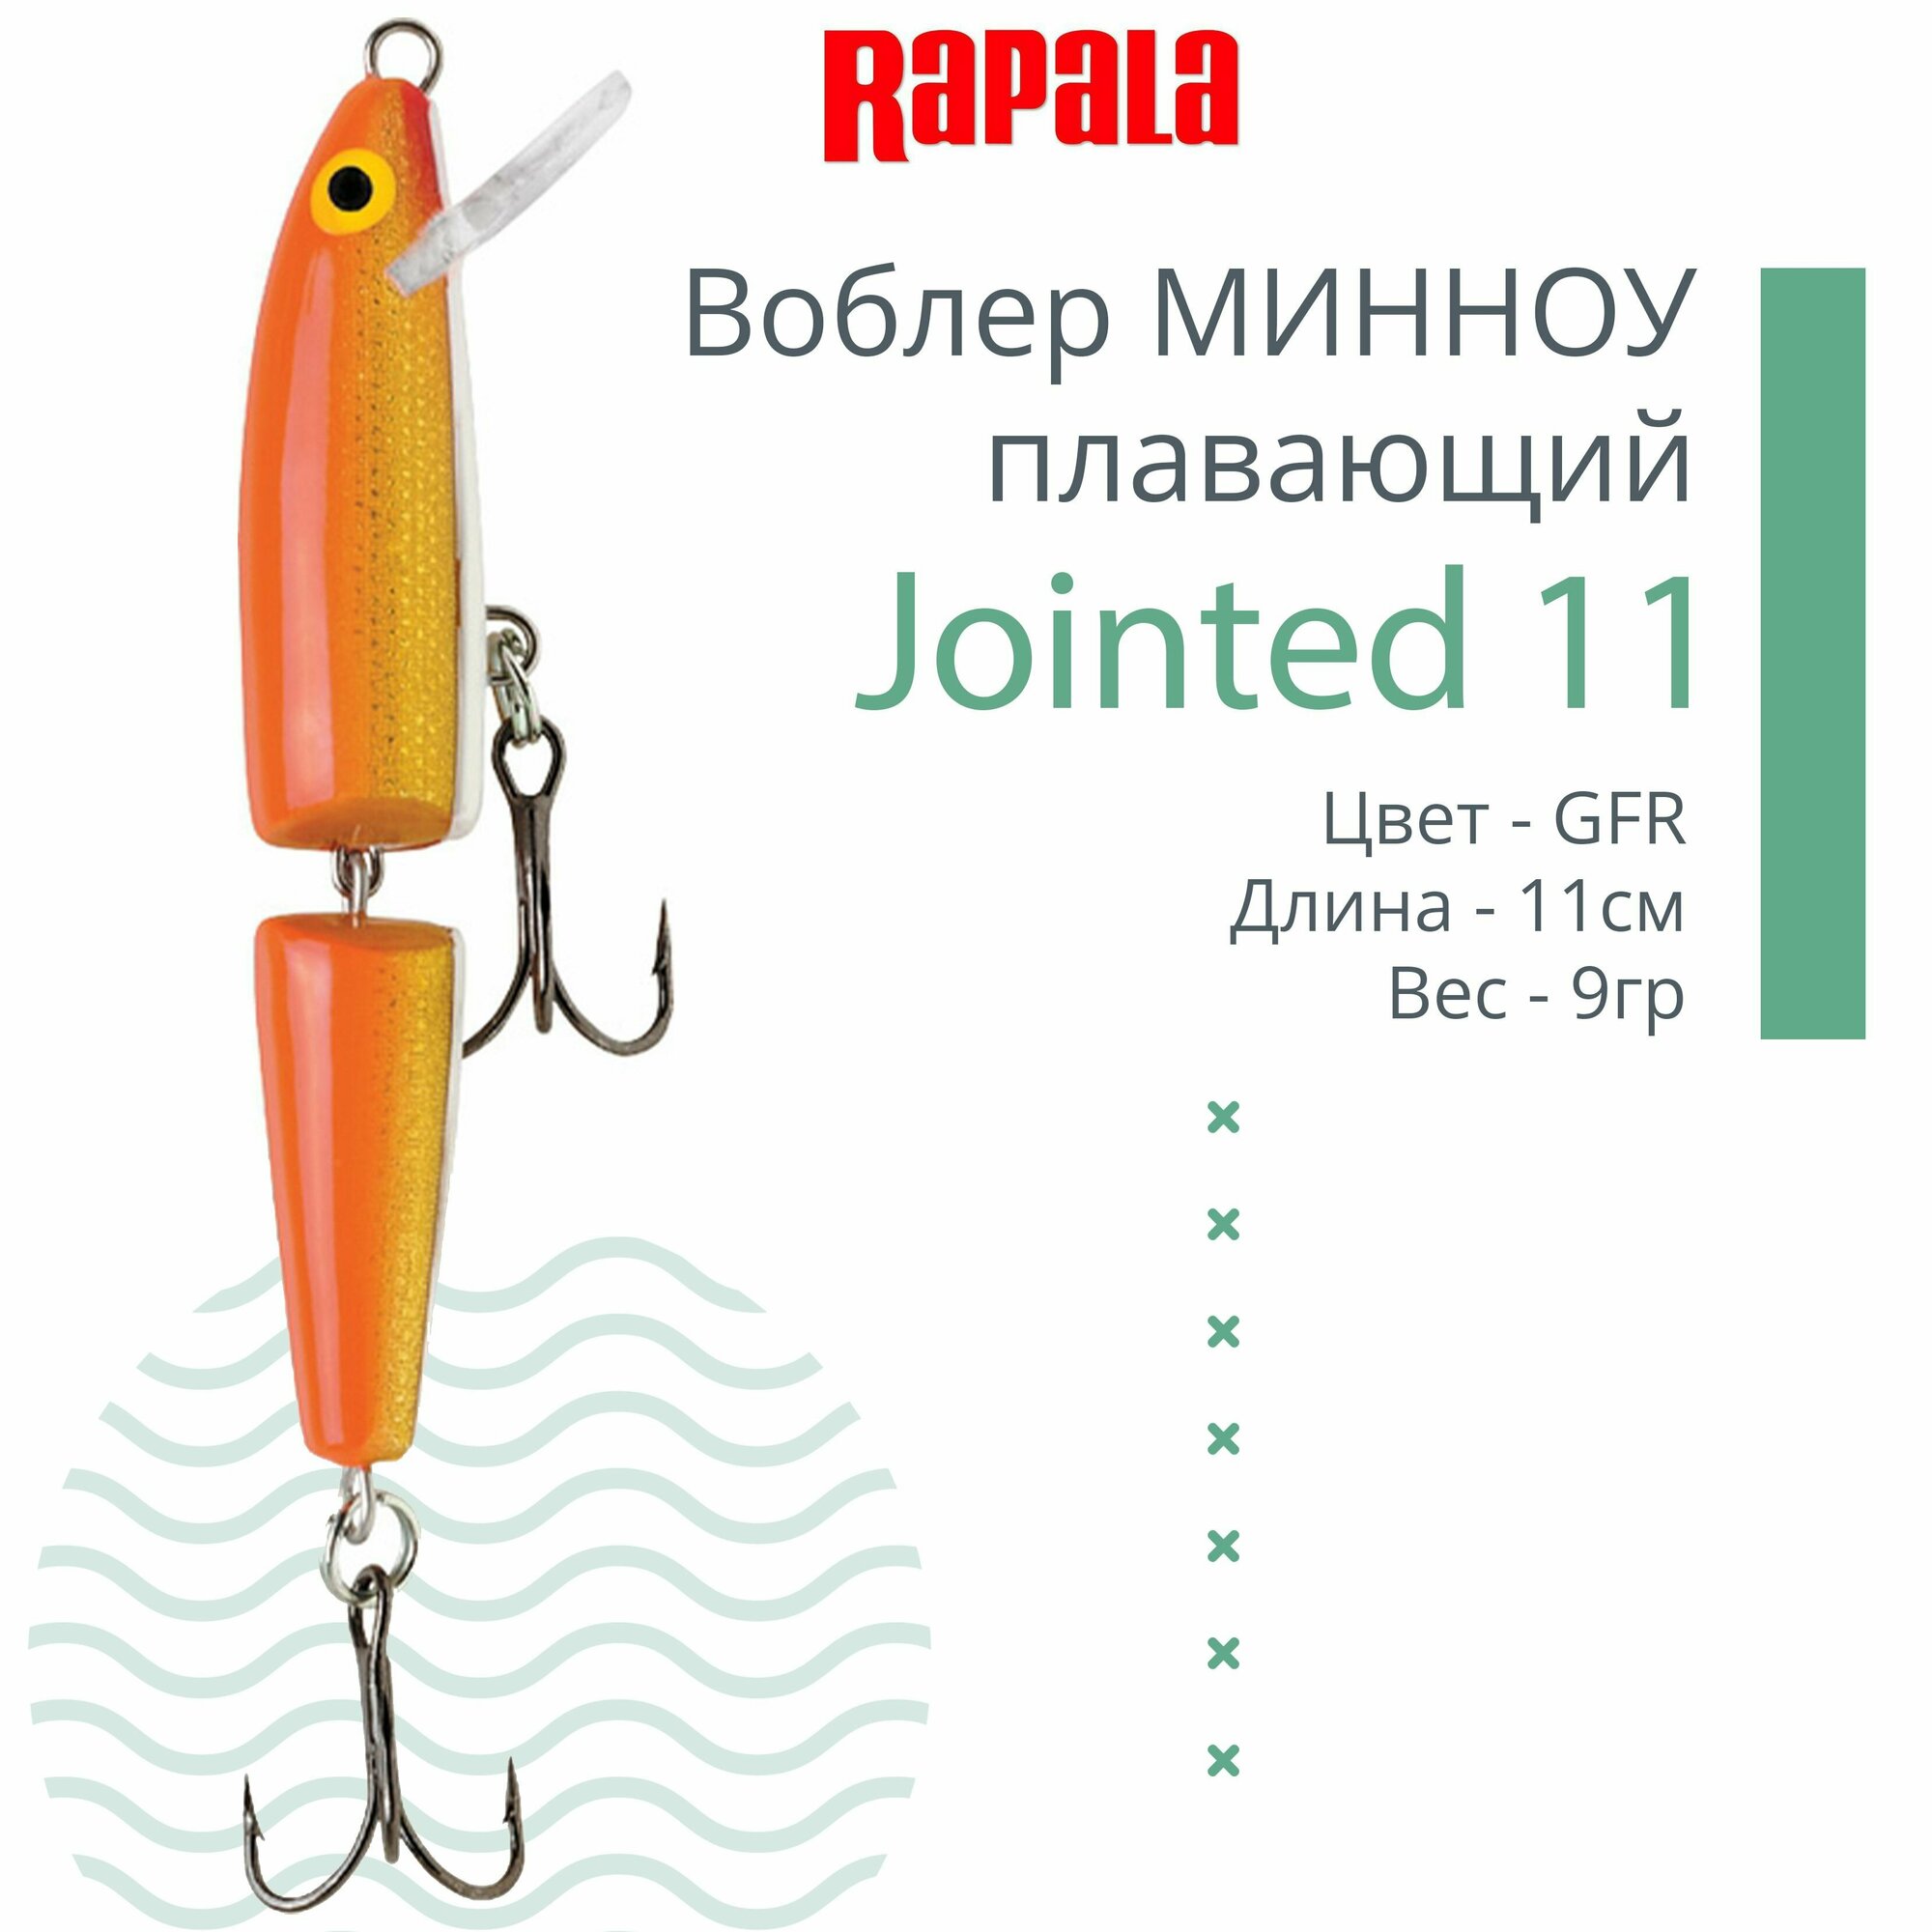 Воблер для рыбалки RAPALA Jointed 11, 11см, 9гр, цвет GFR, плавающий